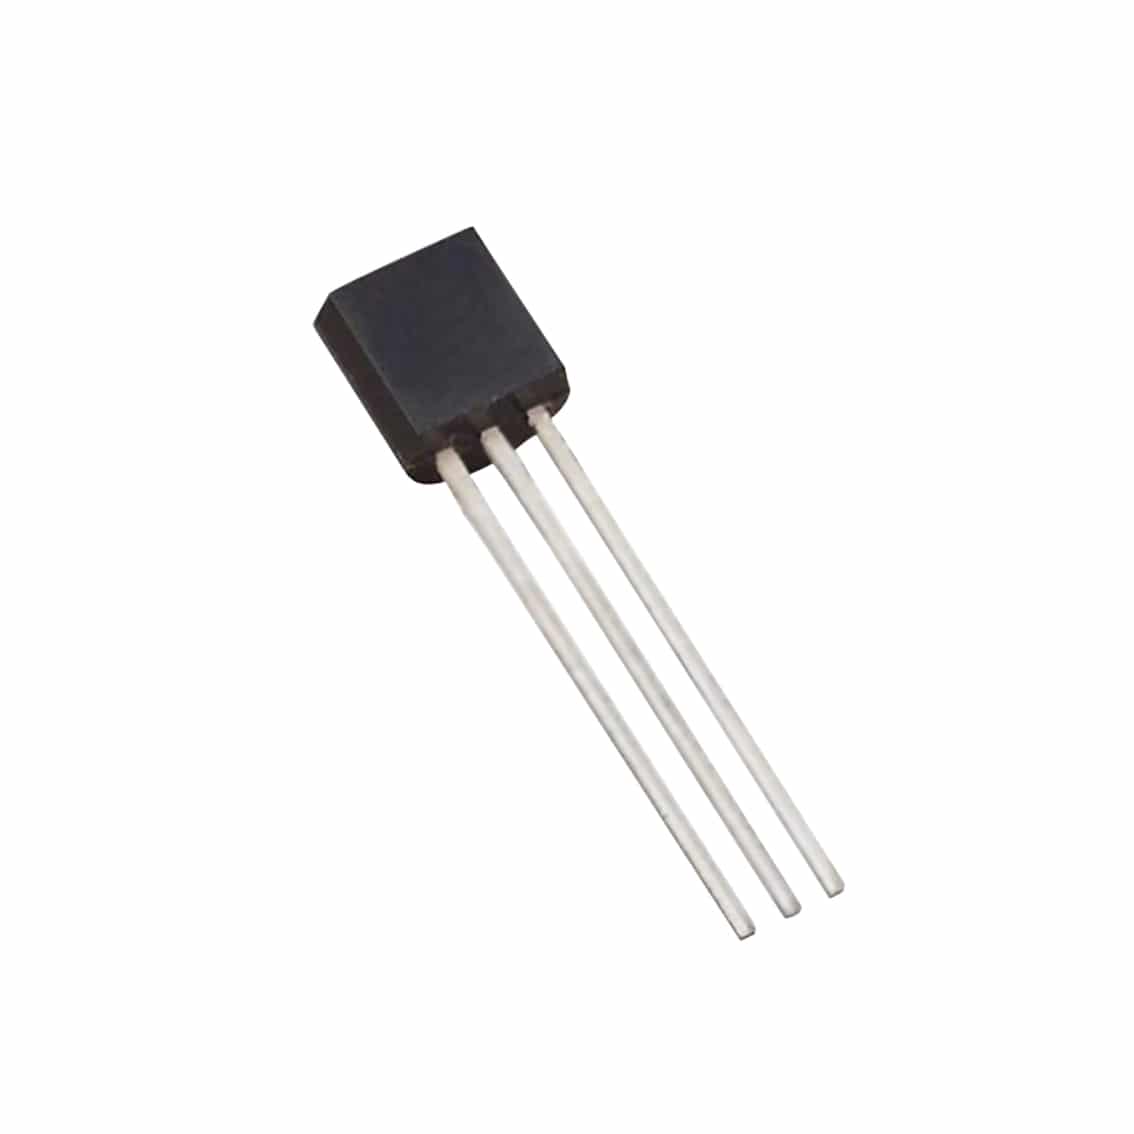 50 x 2N4403 Transistor PNP 40 V 600 mA